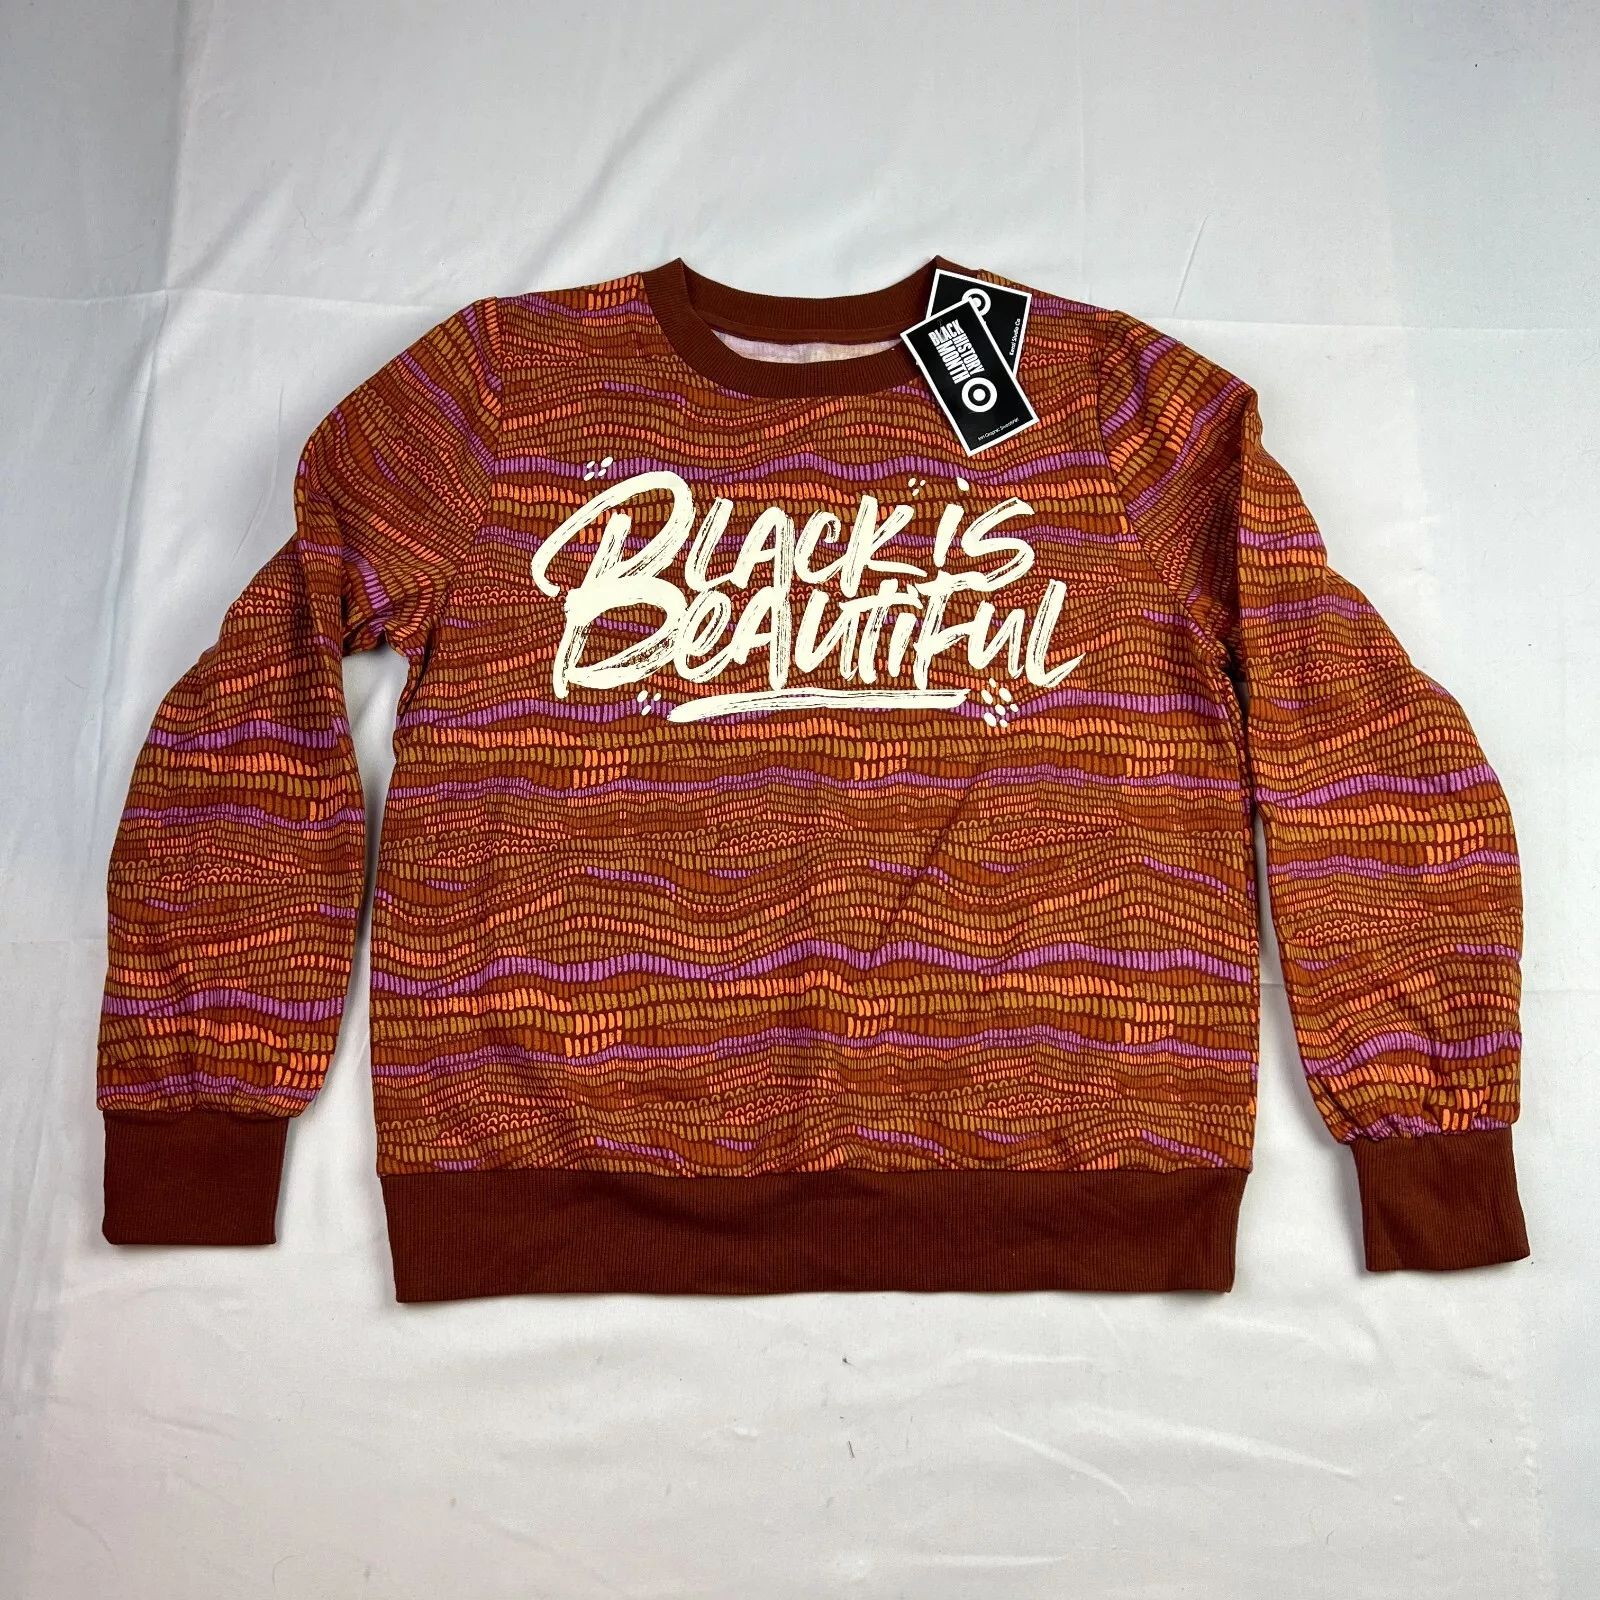 Black History Month Size XS Sweatshirt “Black is Beautiful” Long Sleeves Rustic  | eBay | eBay US